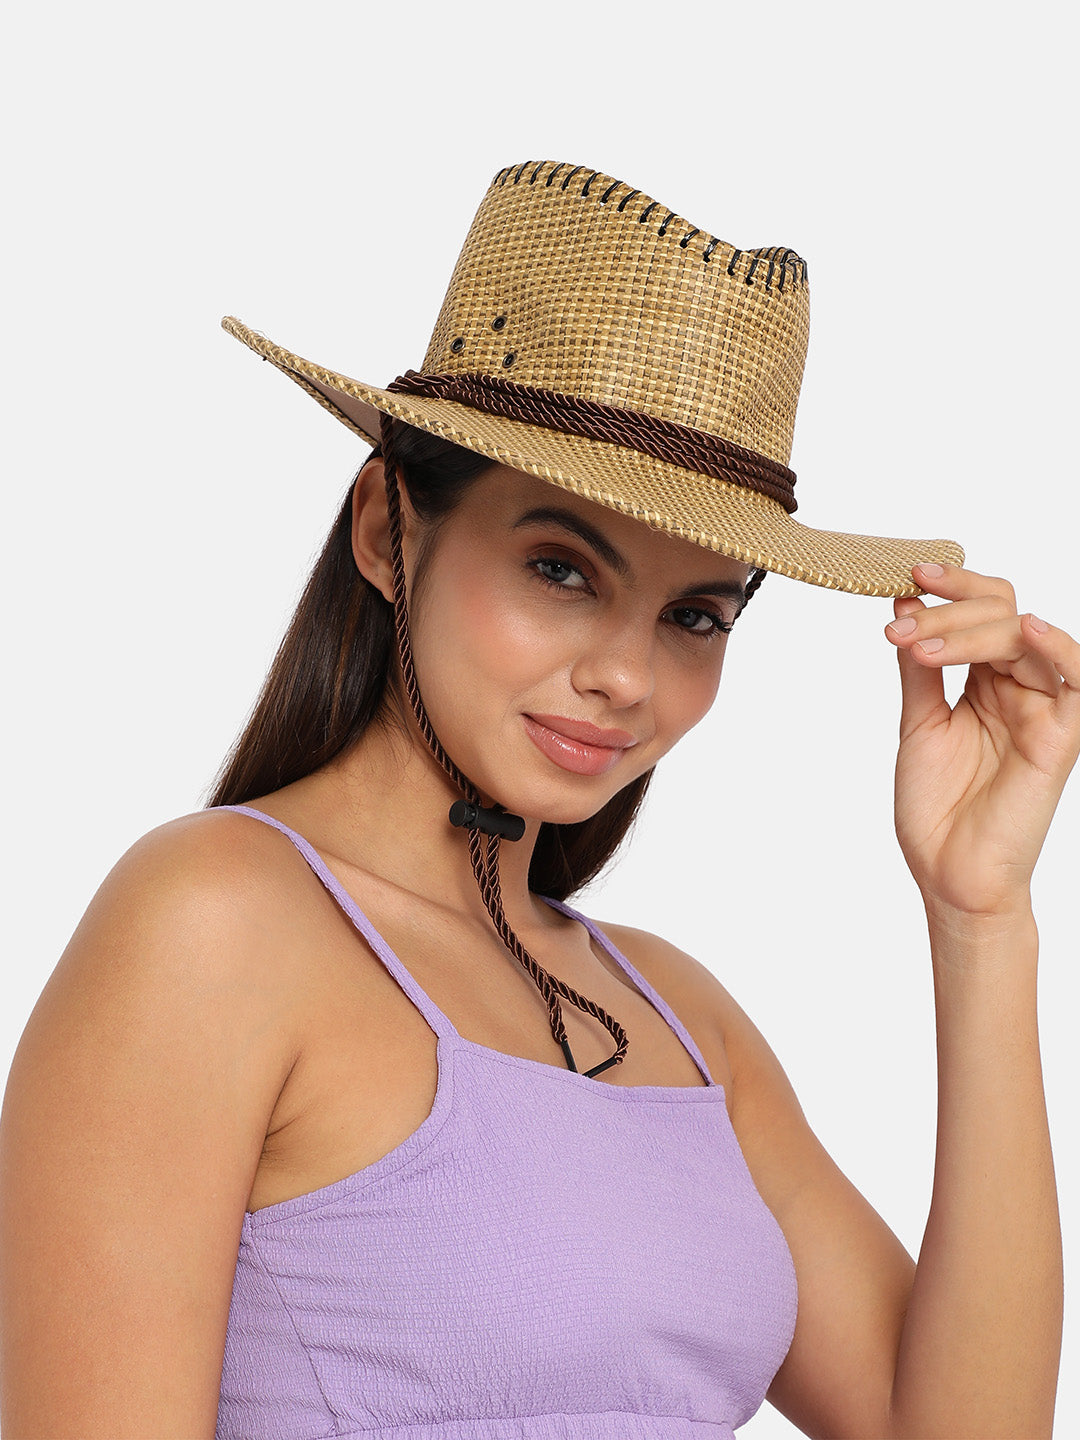 Contrast Rope Cowboy Hat - Beige